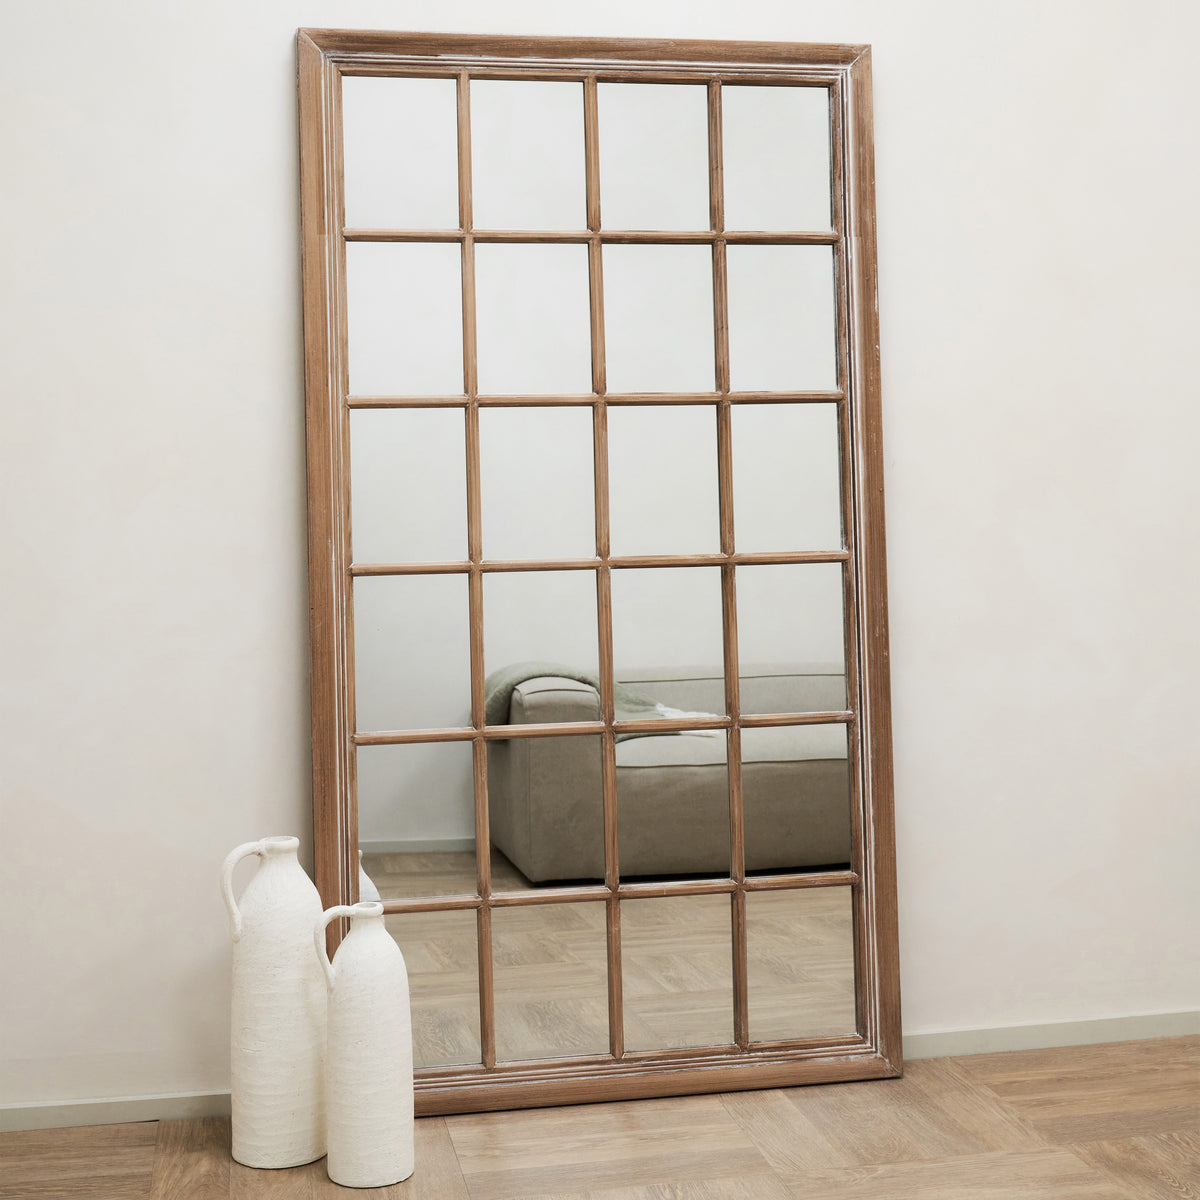 Sasha - Miroir long de fenêtre Shabby Chic en chêne 180 cm x 100 cm